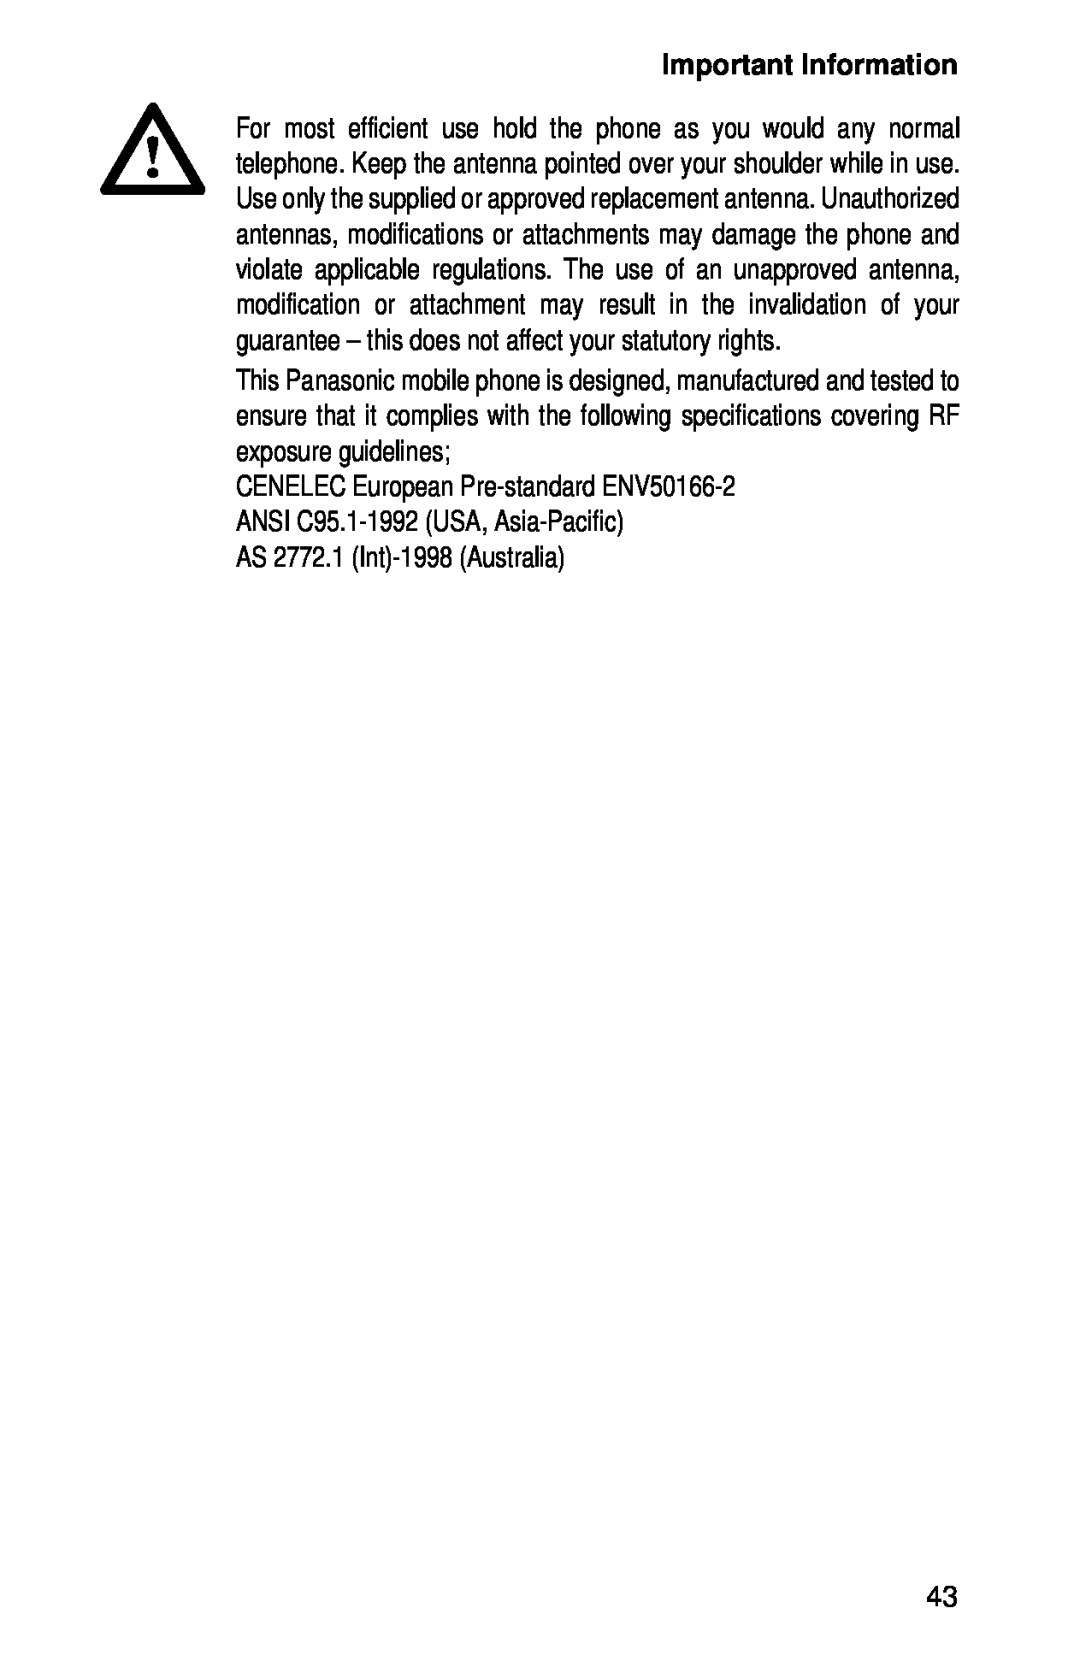 Panasonic EB-GD52 operating instructions Important Information, AS 2772.1 Int-1998 Australia 